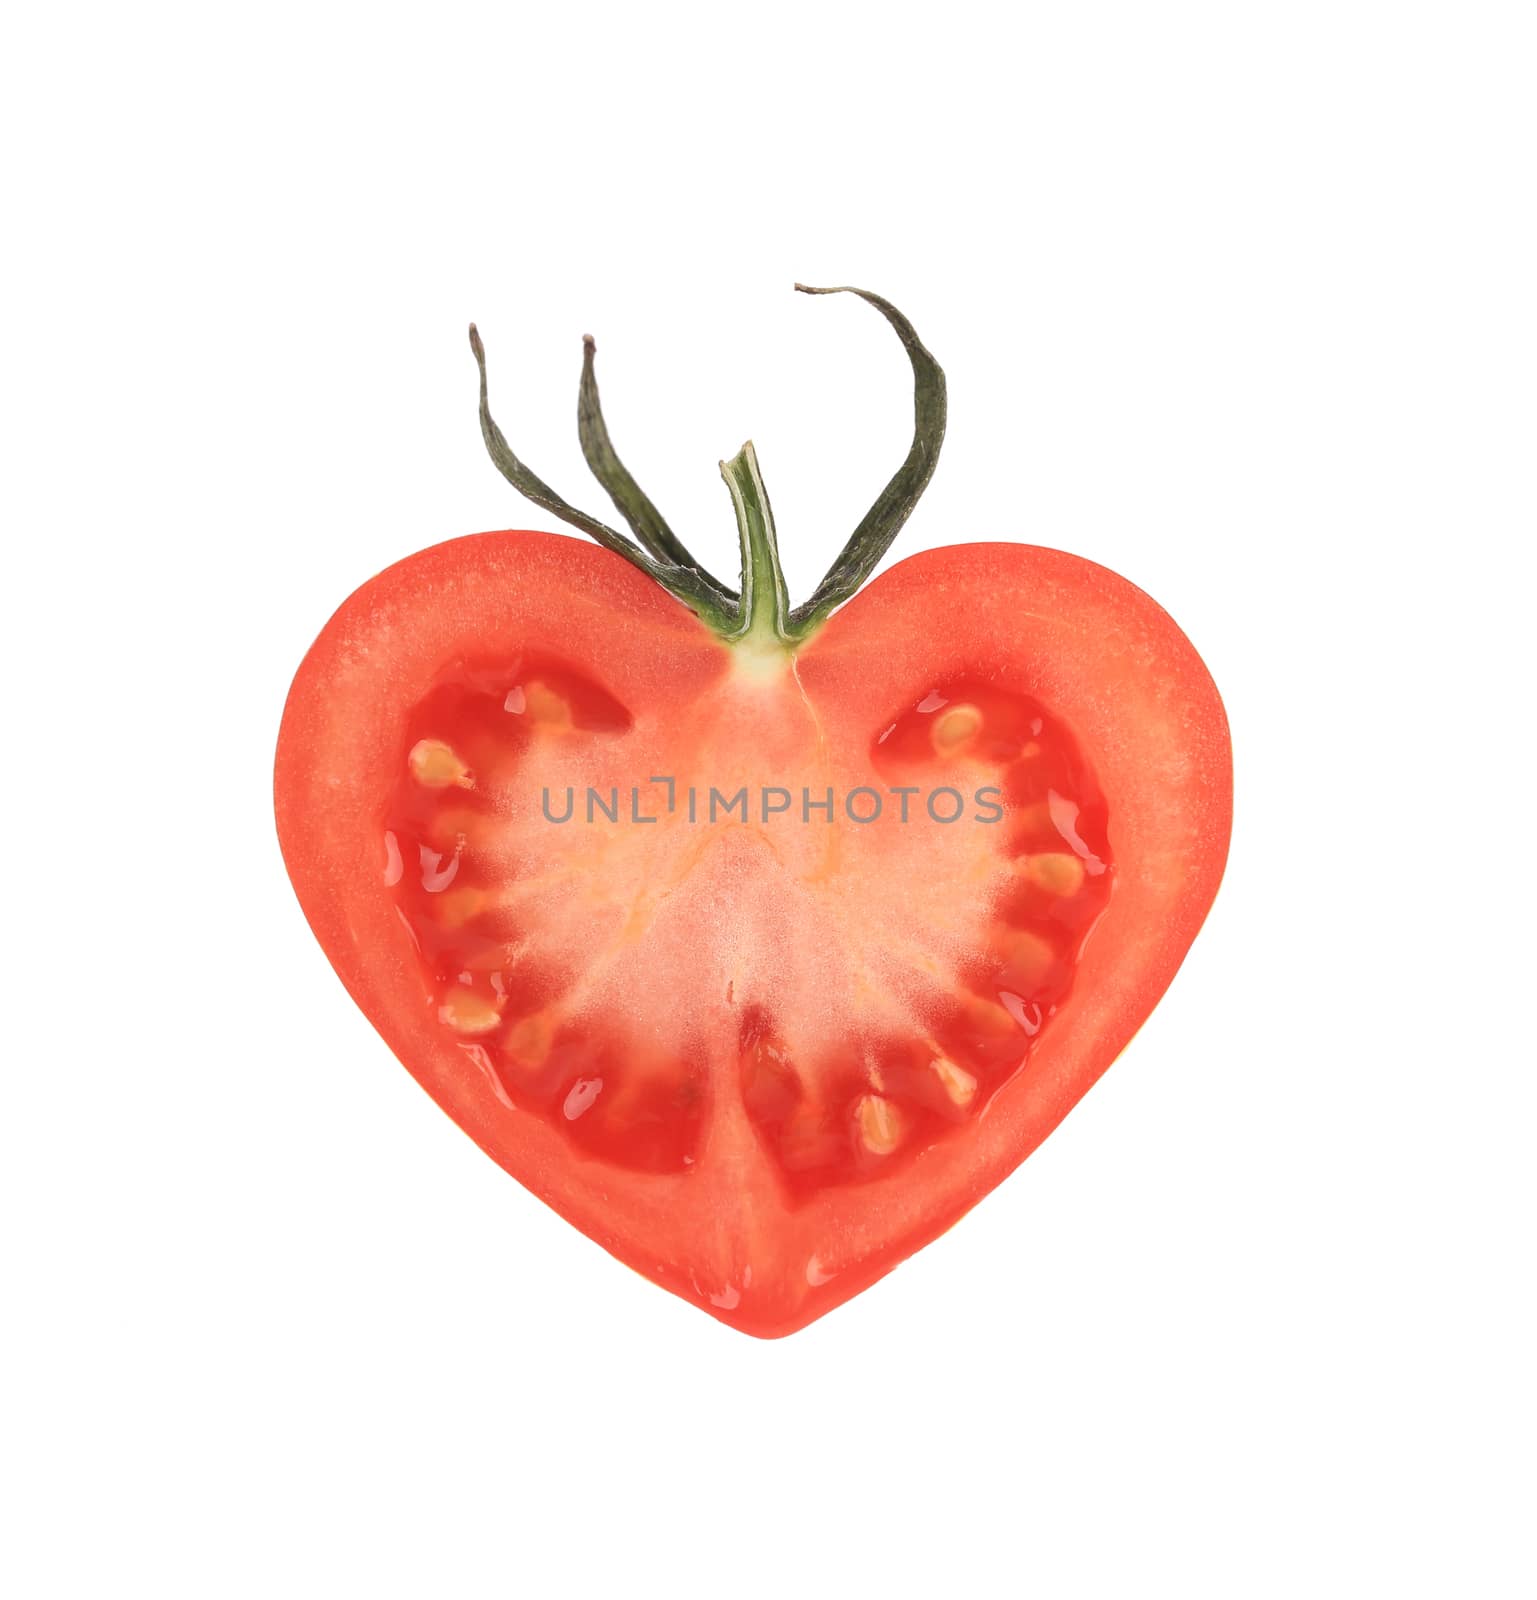 Heart-shaped tomato. by indigolotos